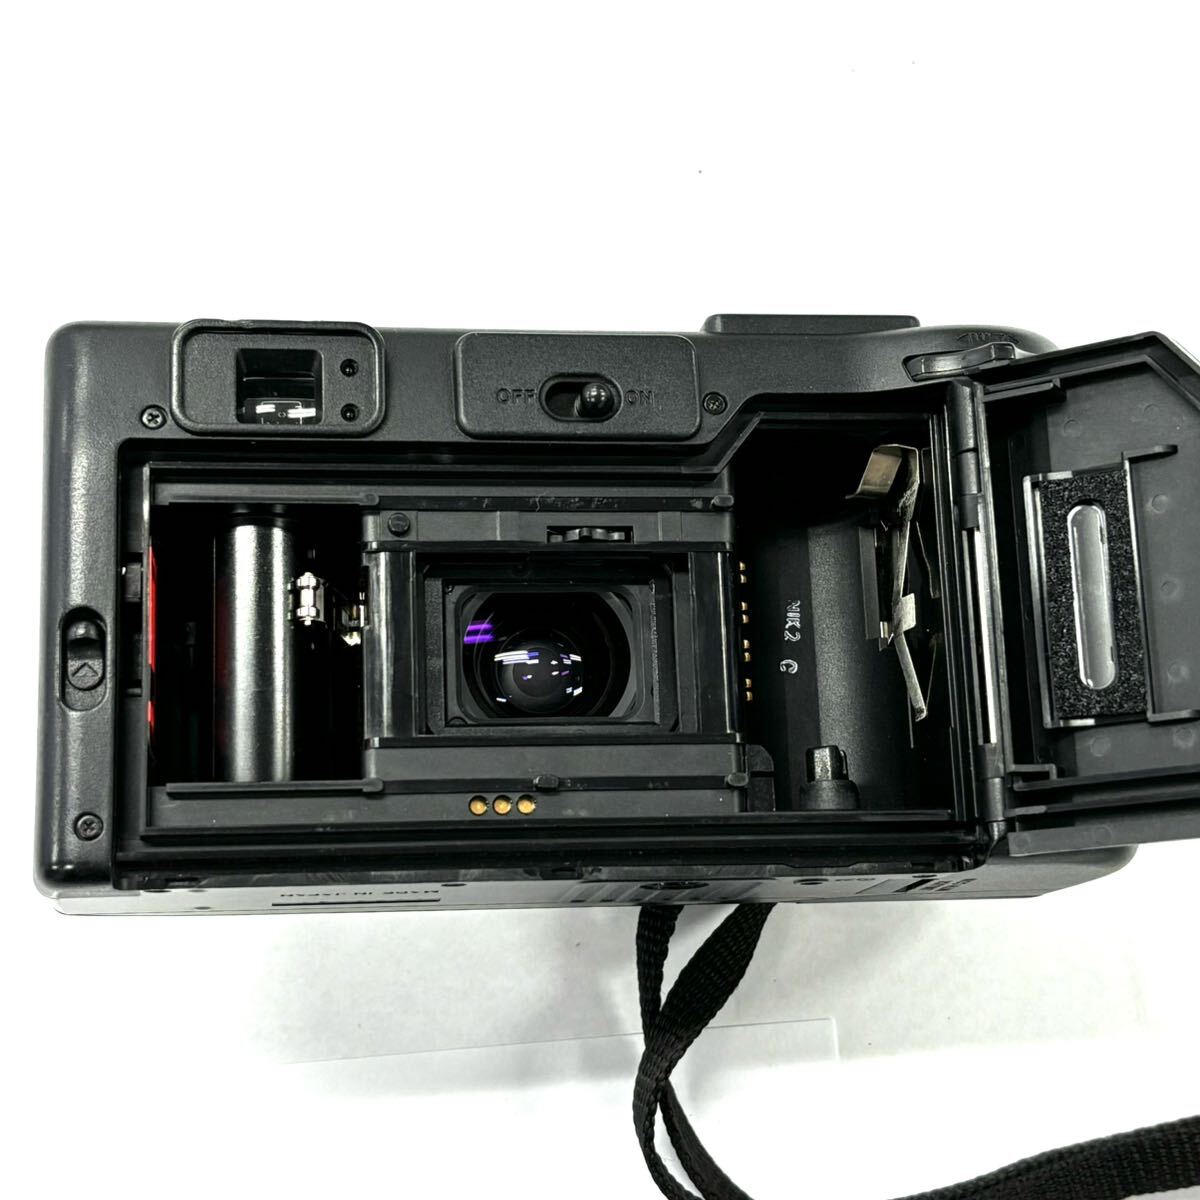 H2815 フィルムカメラ カメラ OLYMPUS オリンパス AZ-100 ZOOM QUARTZDATE AUTO FOCUS/QUICK FLASH / 35-70mm ジャンク品 中古 訳ありの画像3